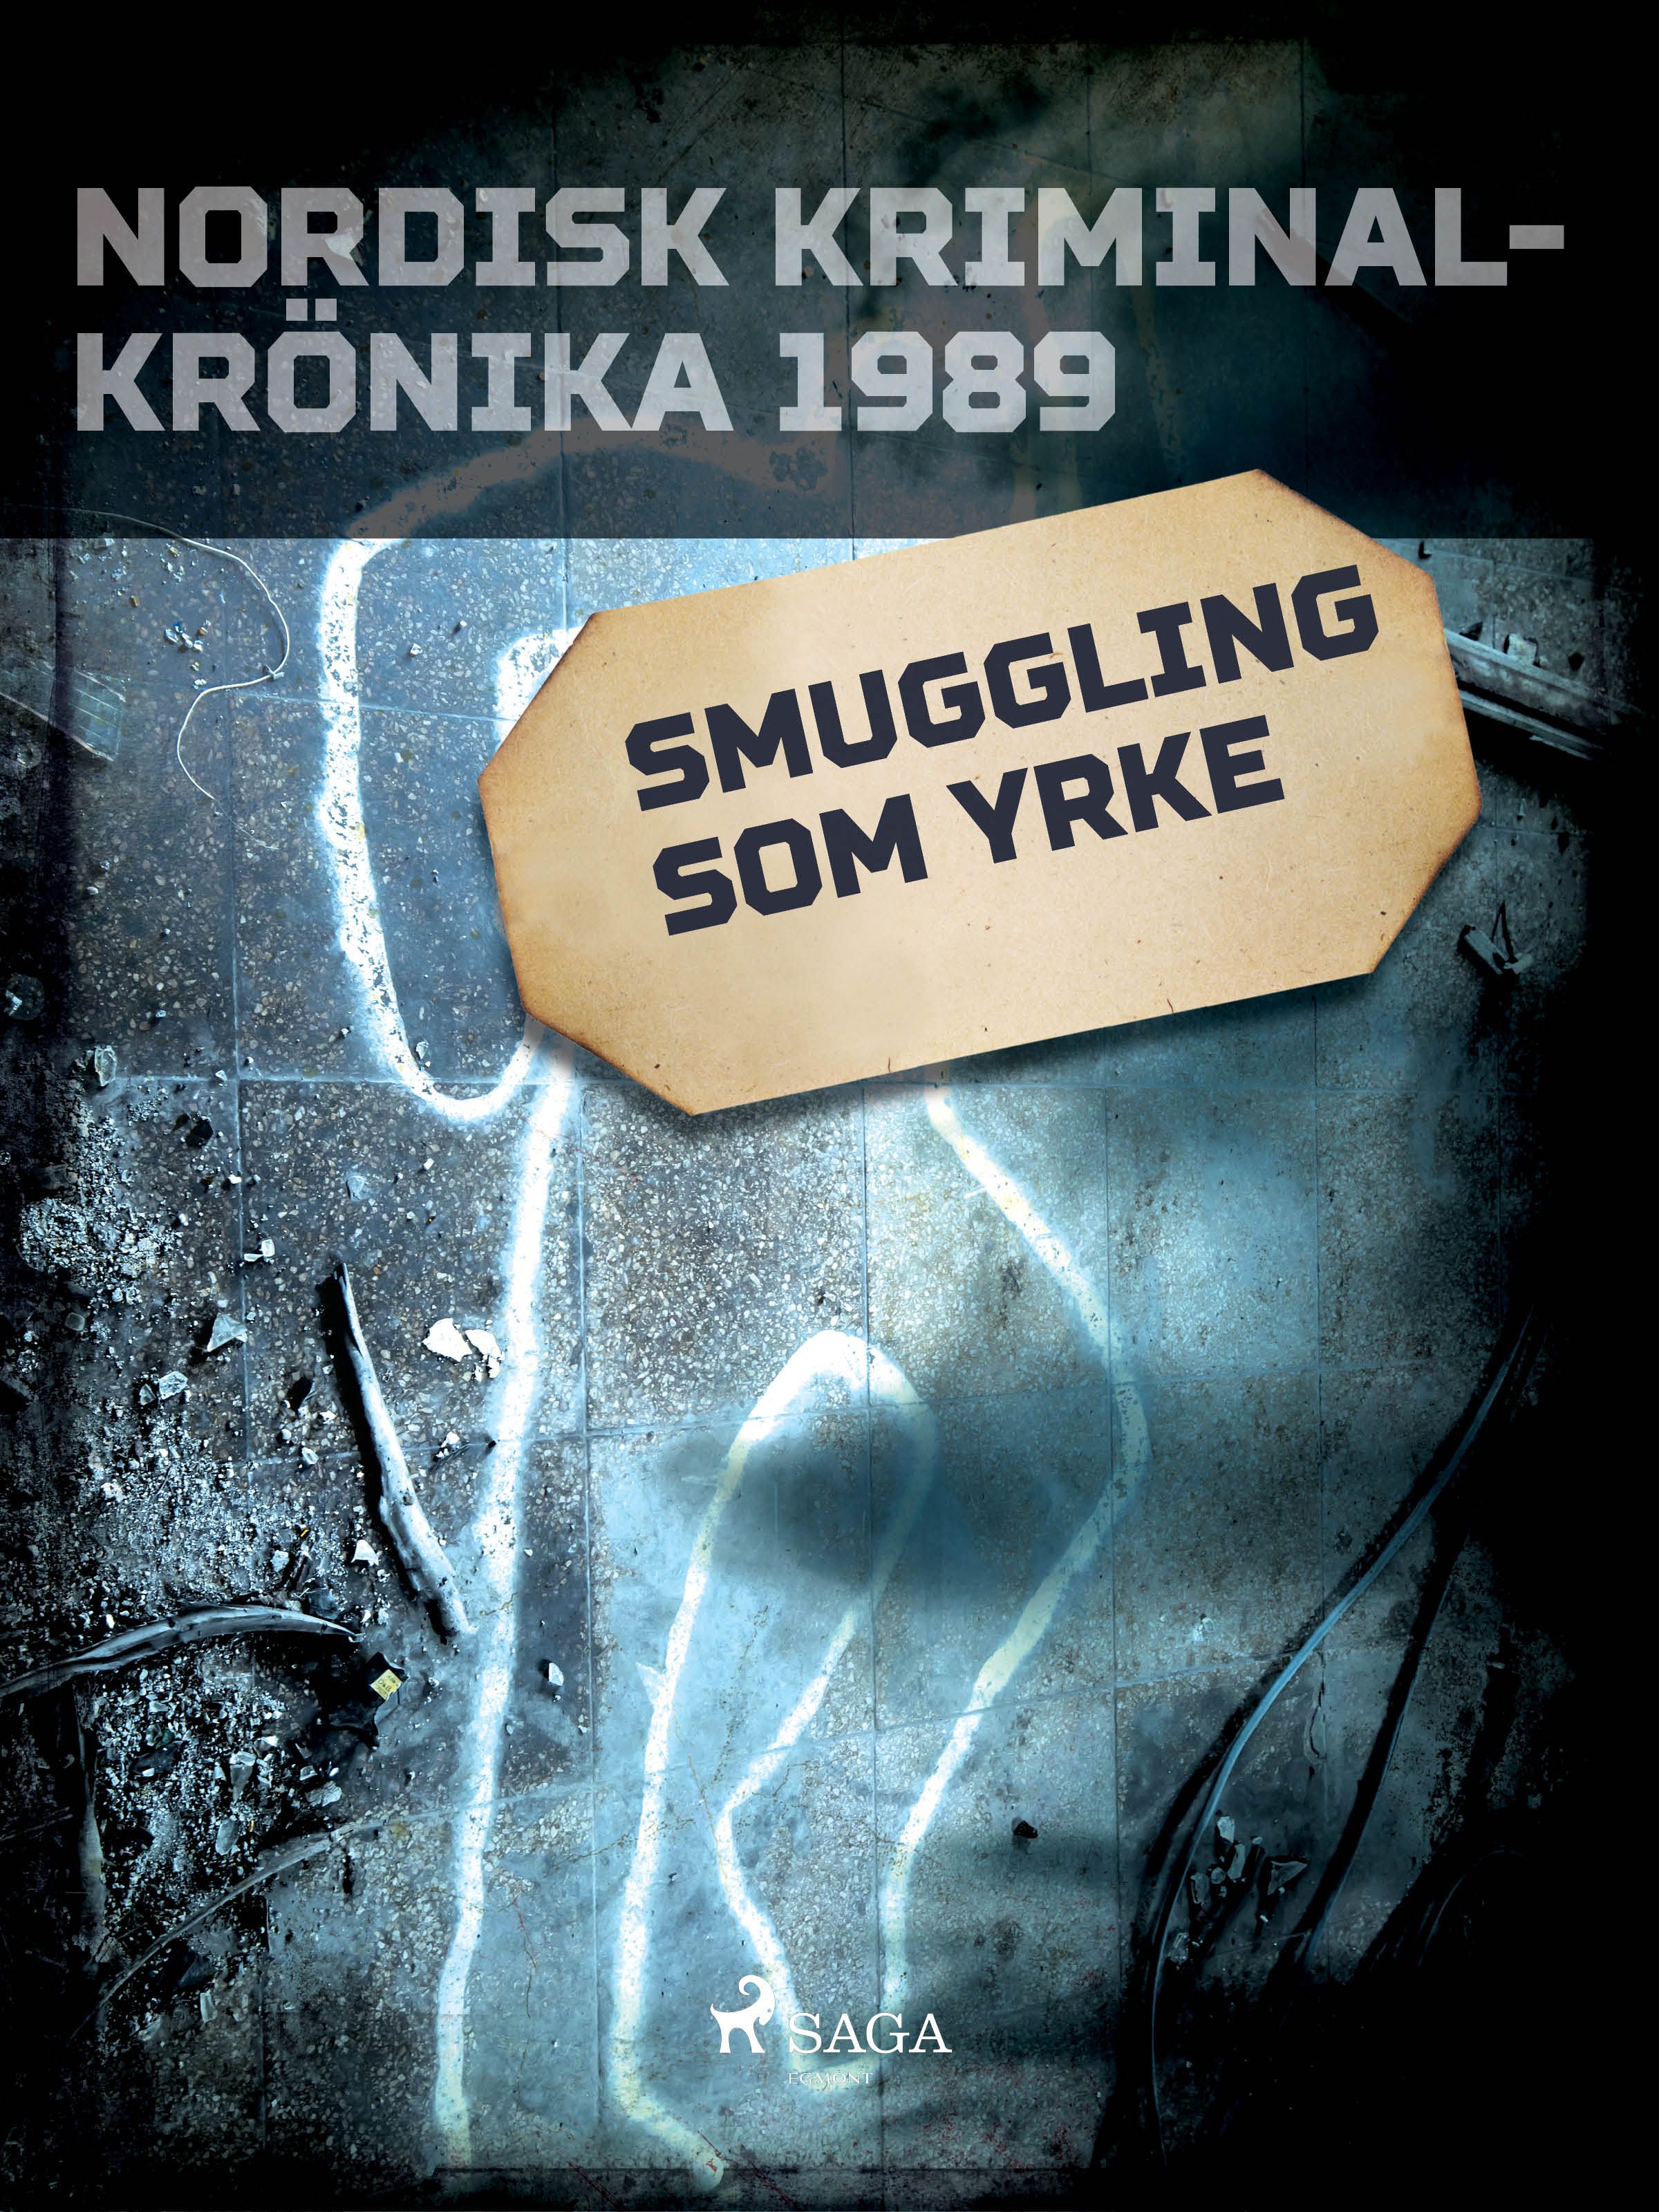 Smuggling som yrke, eBook by Diverse